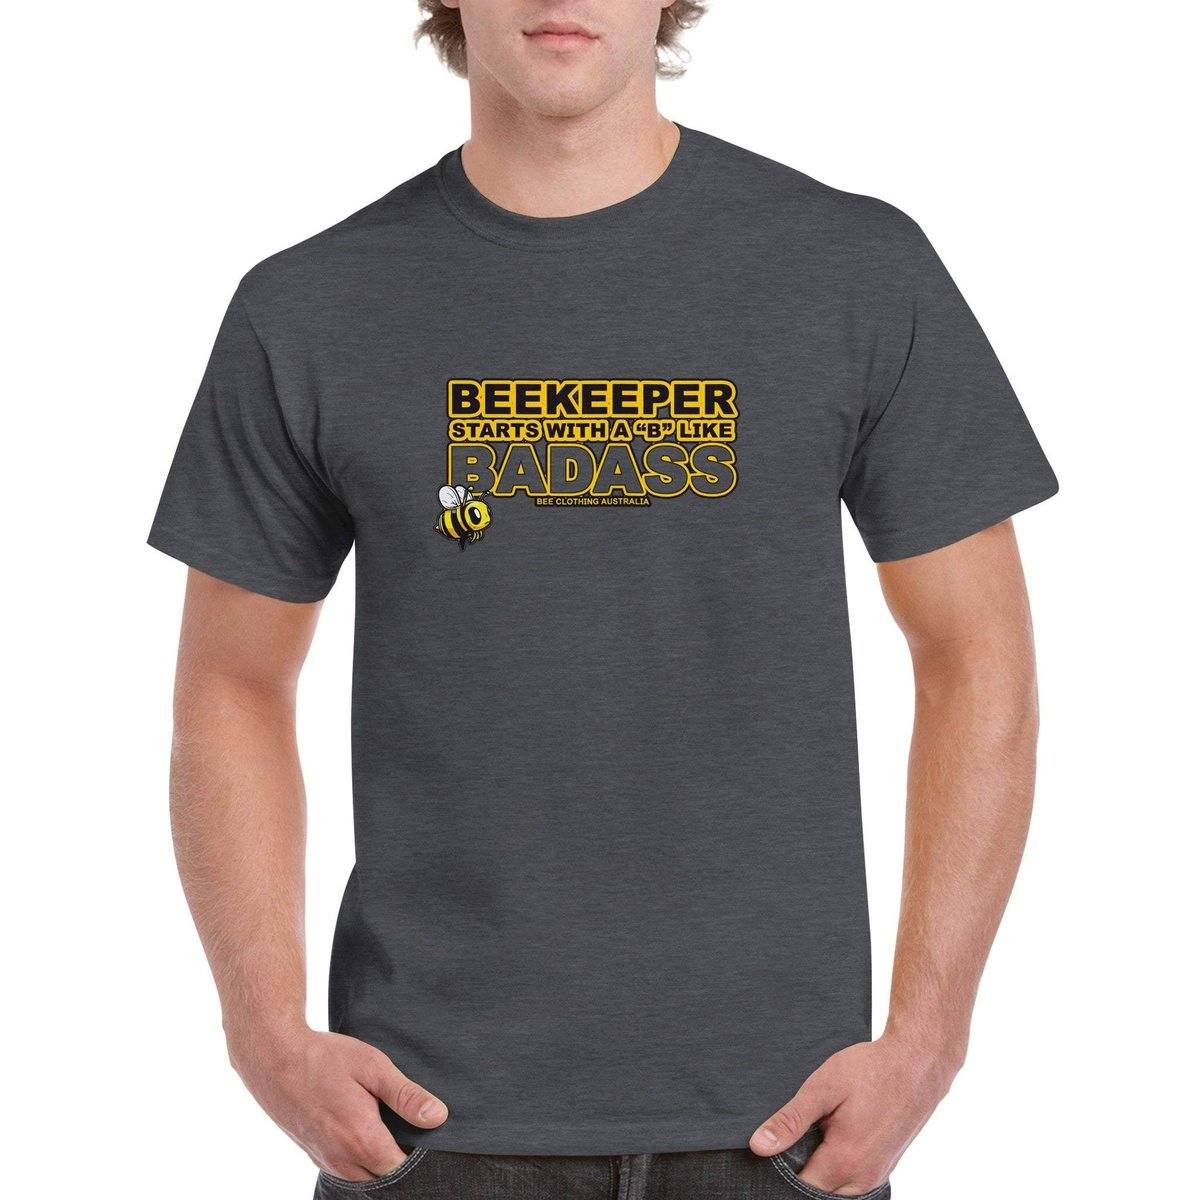 Beekeeper Starts With a B Like BADASS T-Shirt - Badass beekeeper Tshirt - Unisex Crewneck T-shirt Adults T-Shirts Unisex Dark Heather / S Bee Clothing Australia